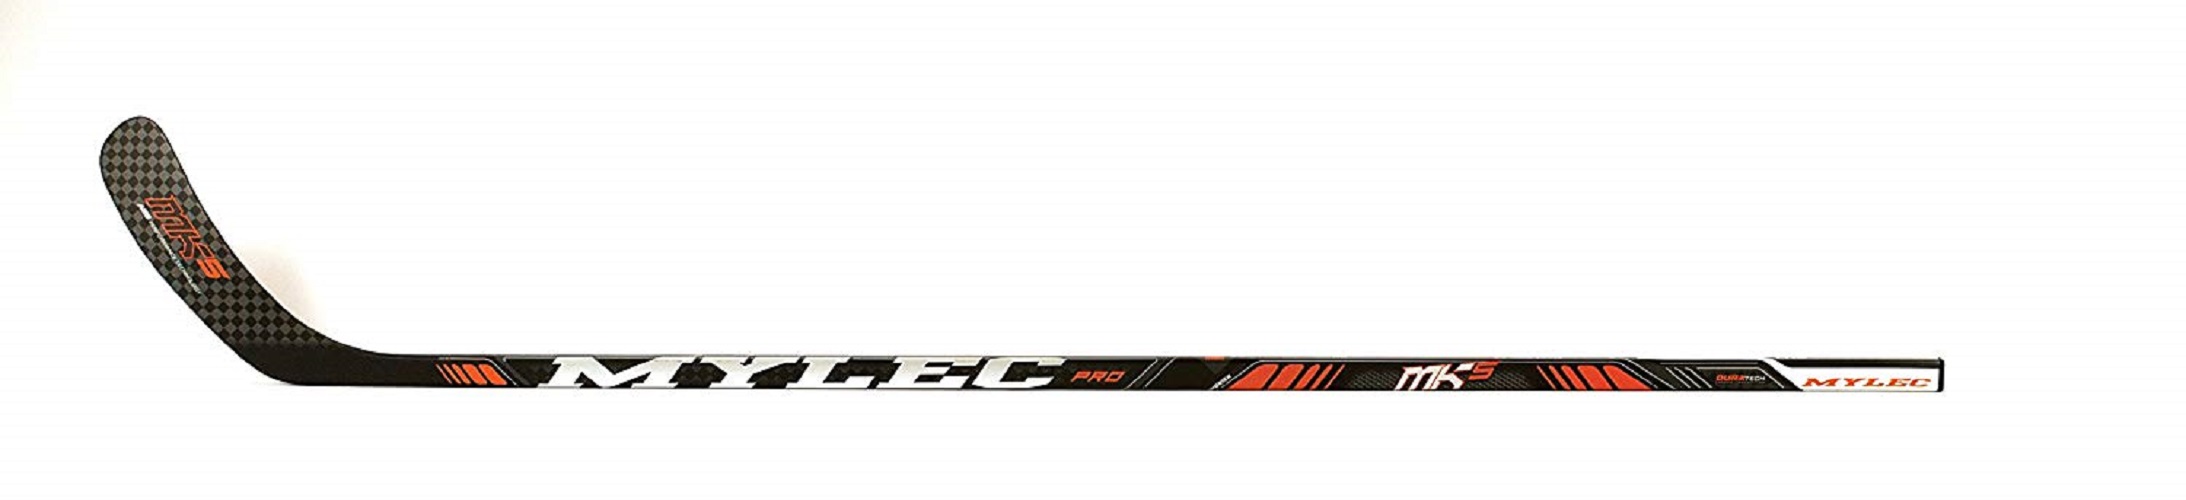 s19 hockey stick